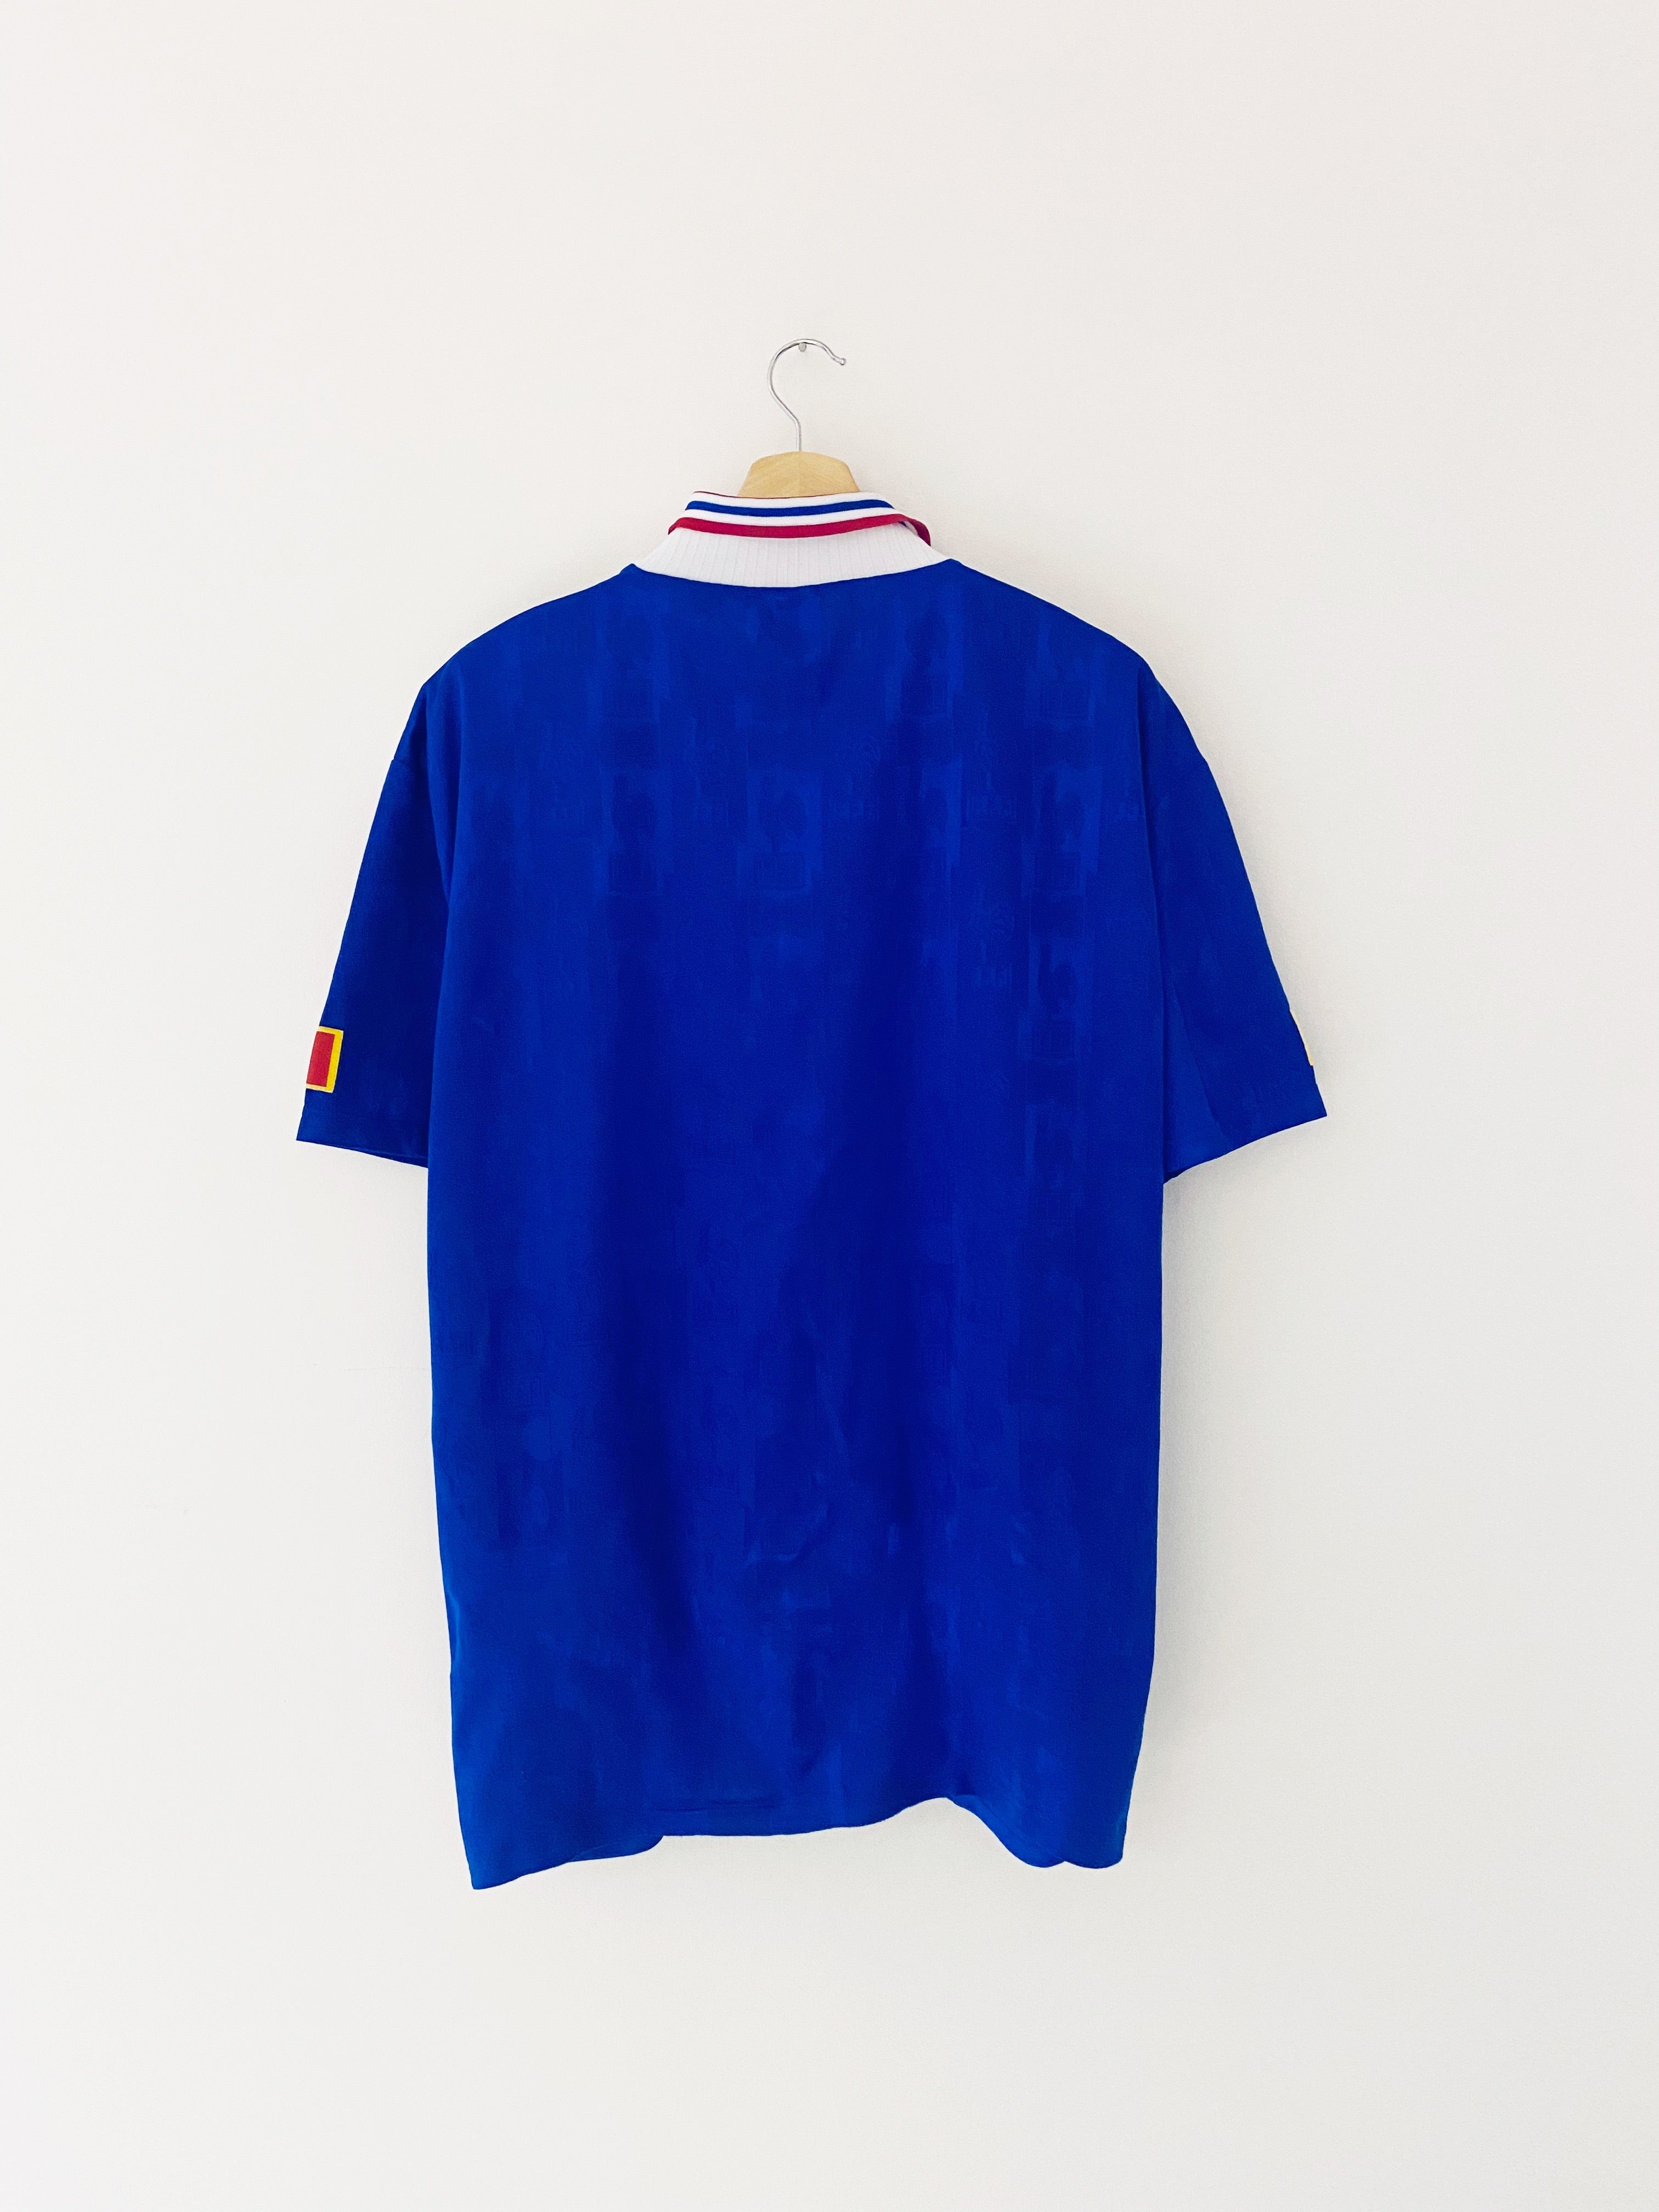 1996/98 France Home Shirt (L/XL) 9/10